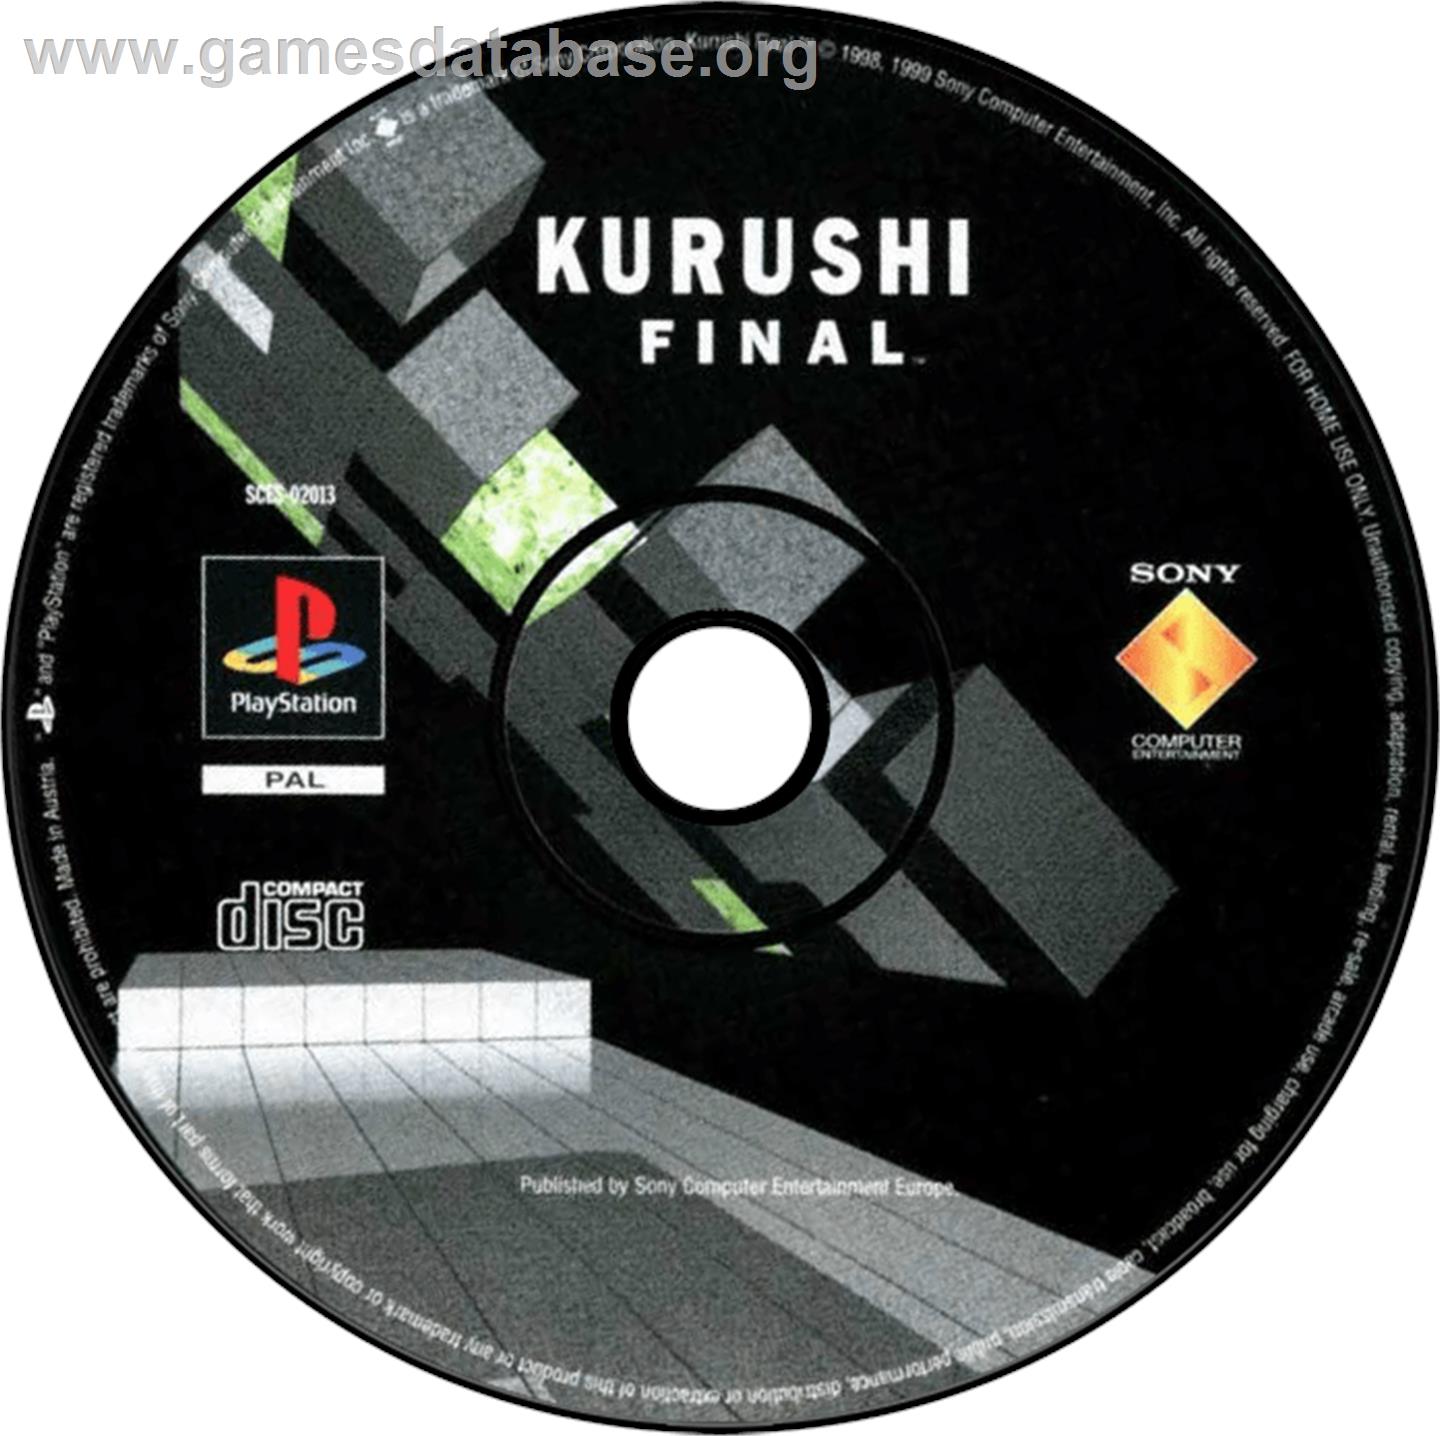 Kurushi Final - Sony Playstation - Artwork - Disc